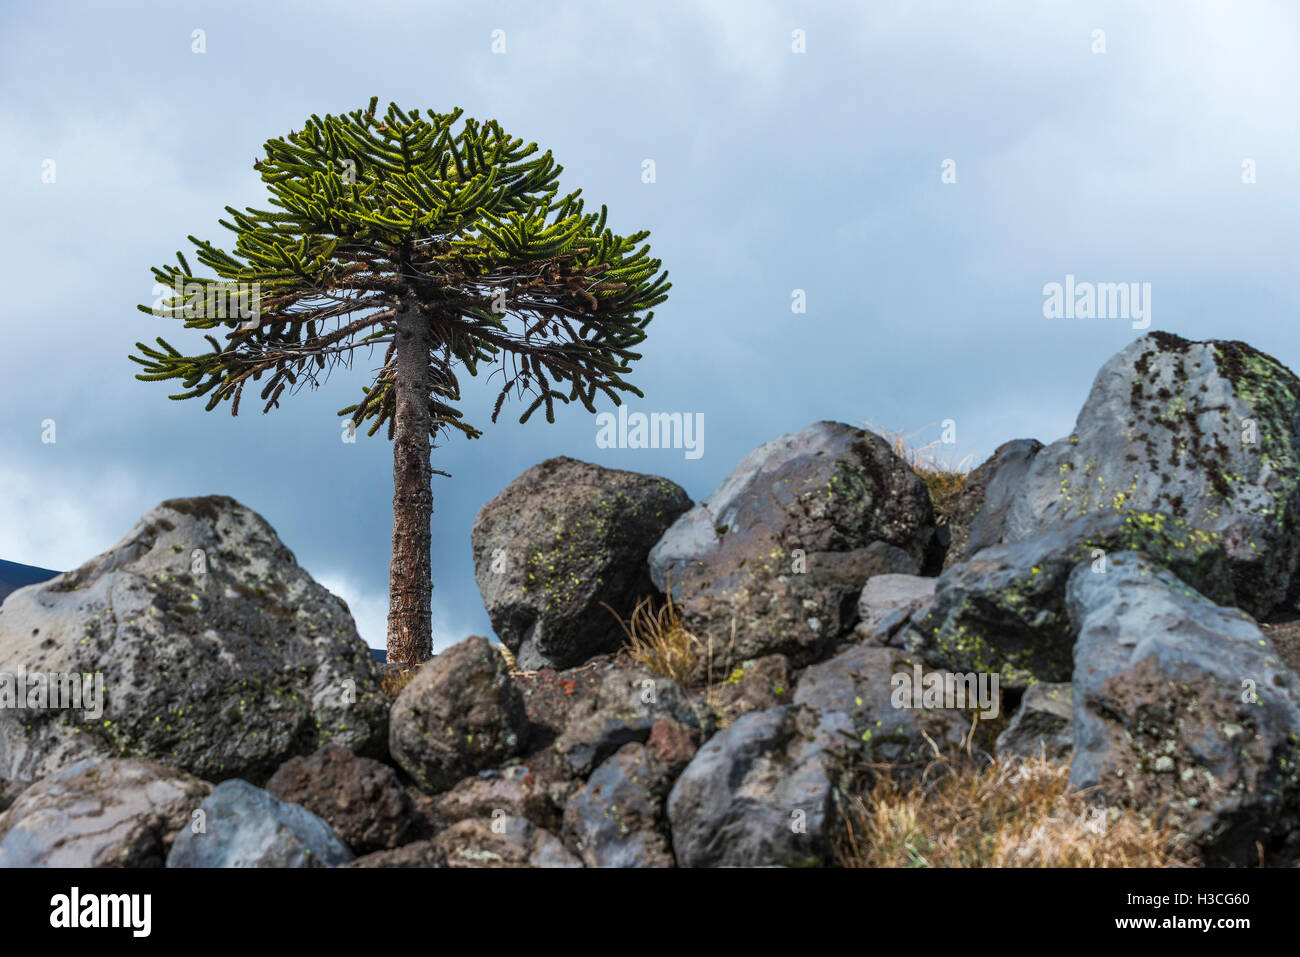 Araucaria tree. Araucaria is a typical tree of the region of Araucania. Stock Photo